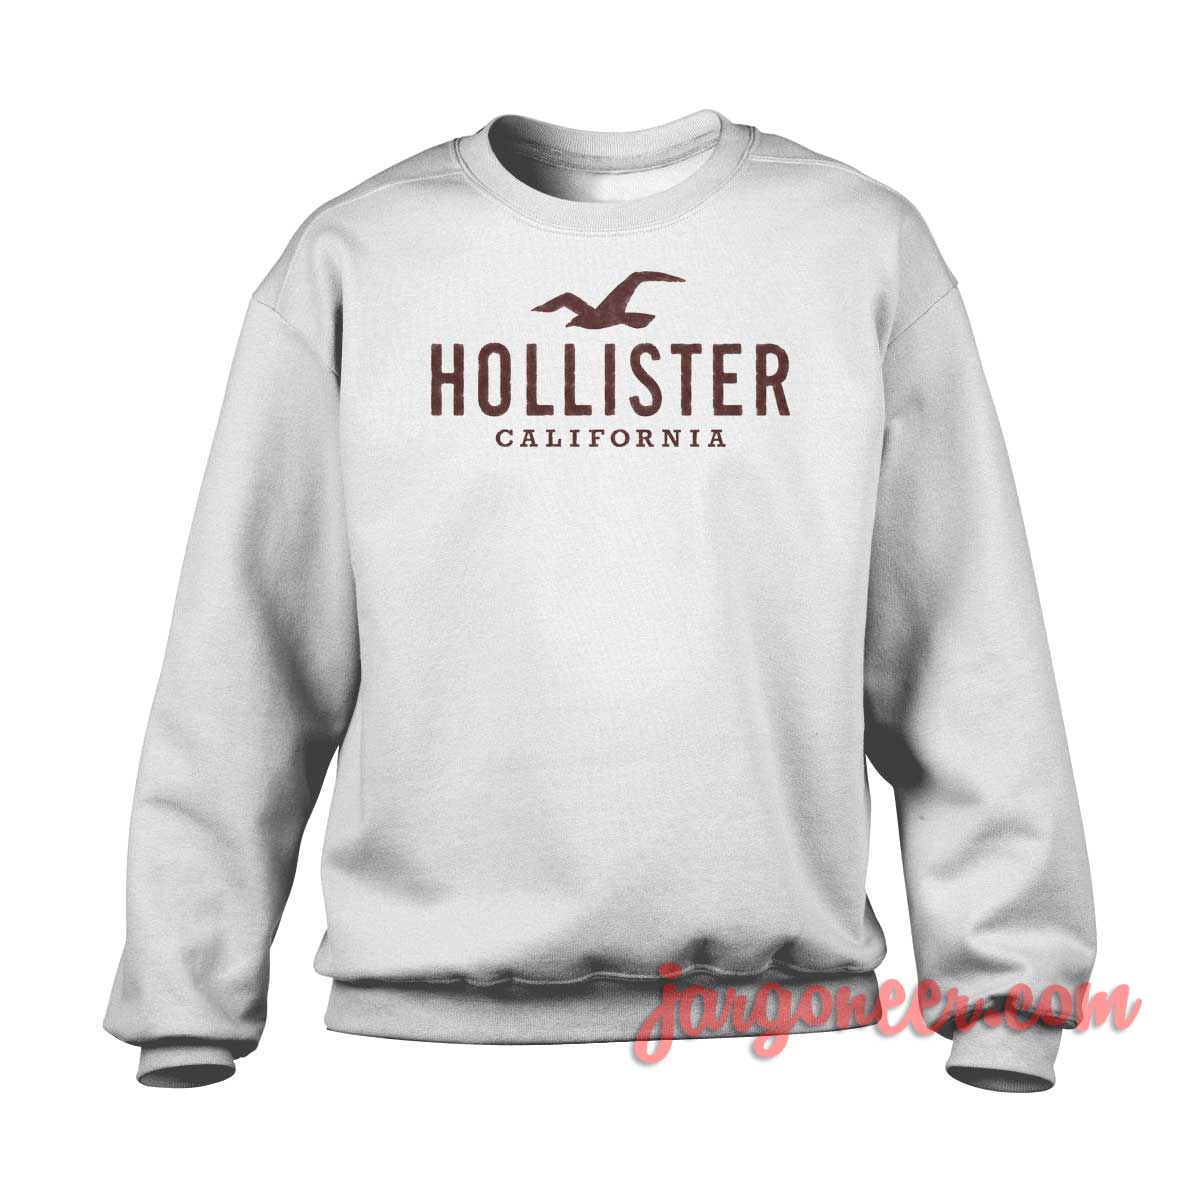 hollister california sweater